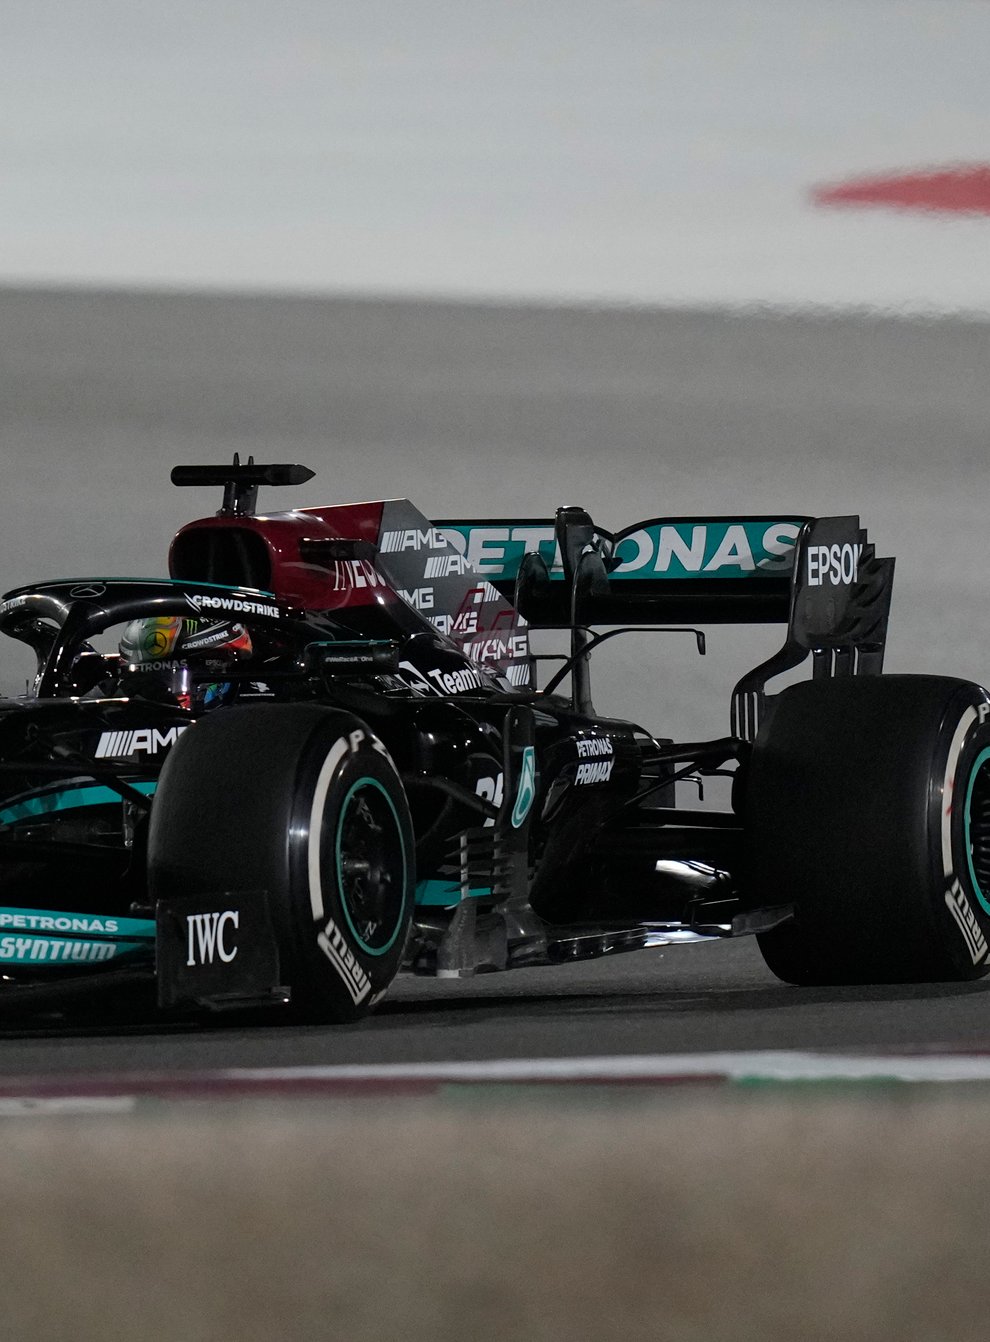 Lewis Hamilton dominated to win the Qatar Grand Prix (Darko Bandic/AP)